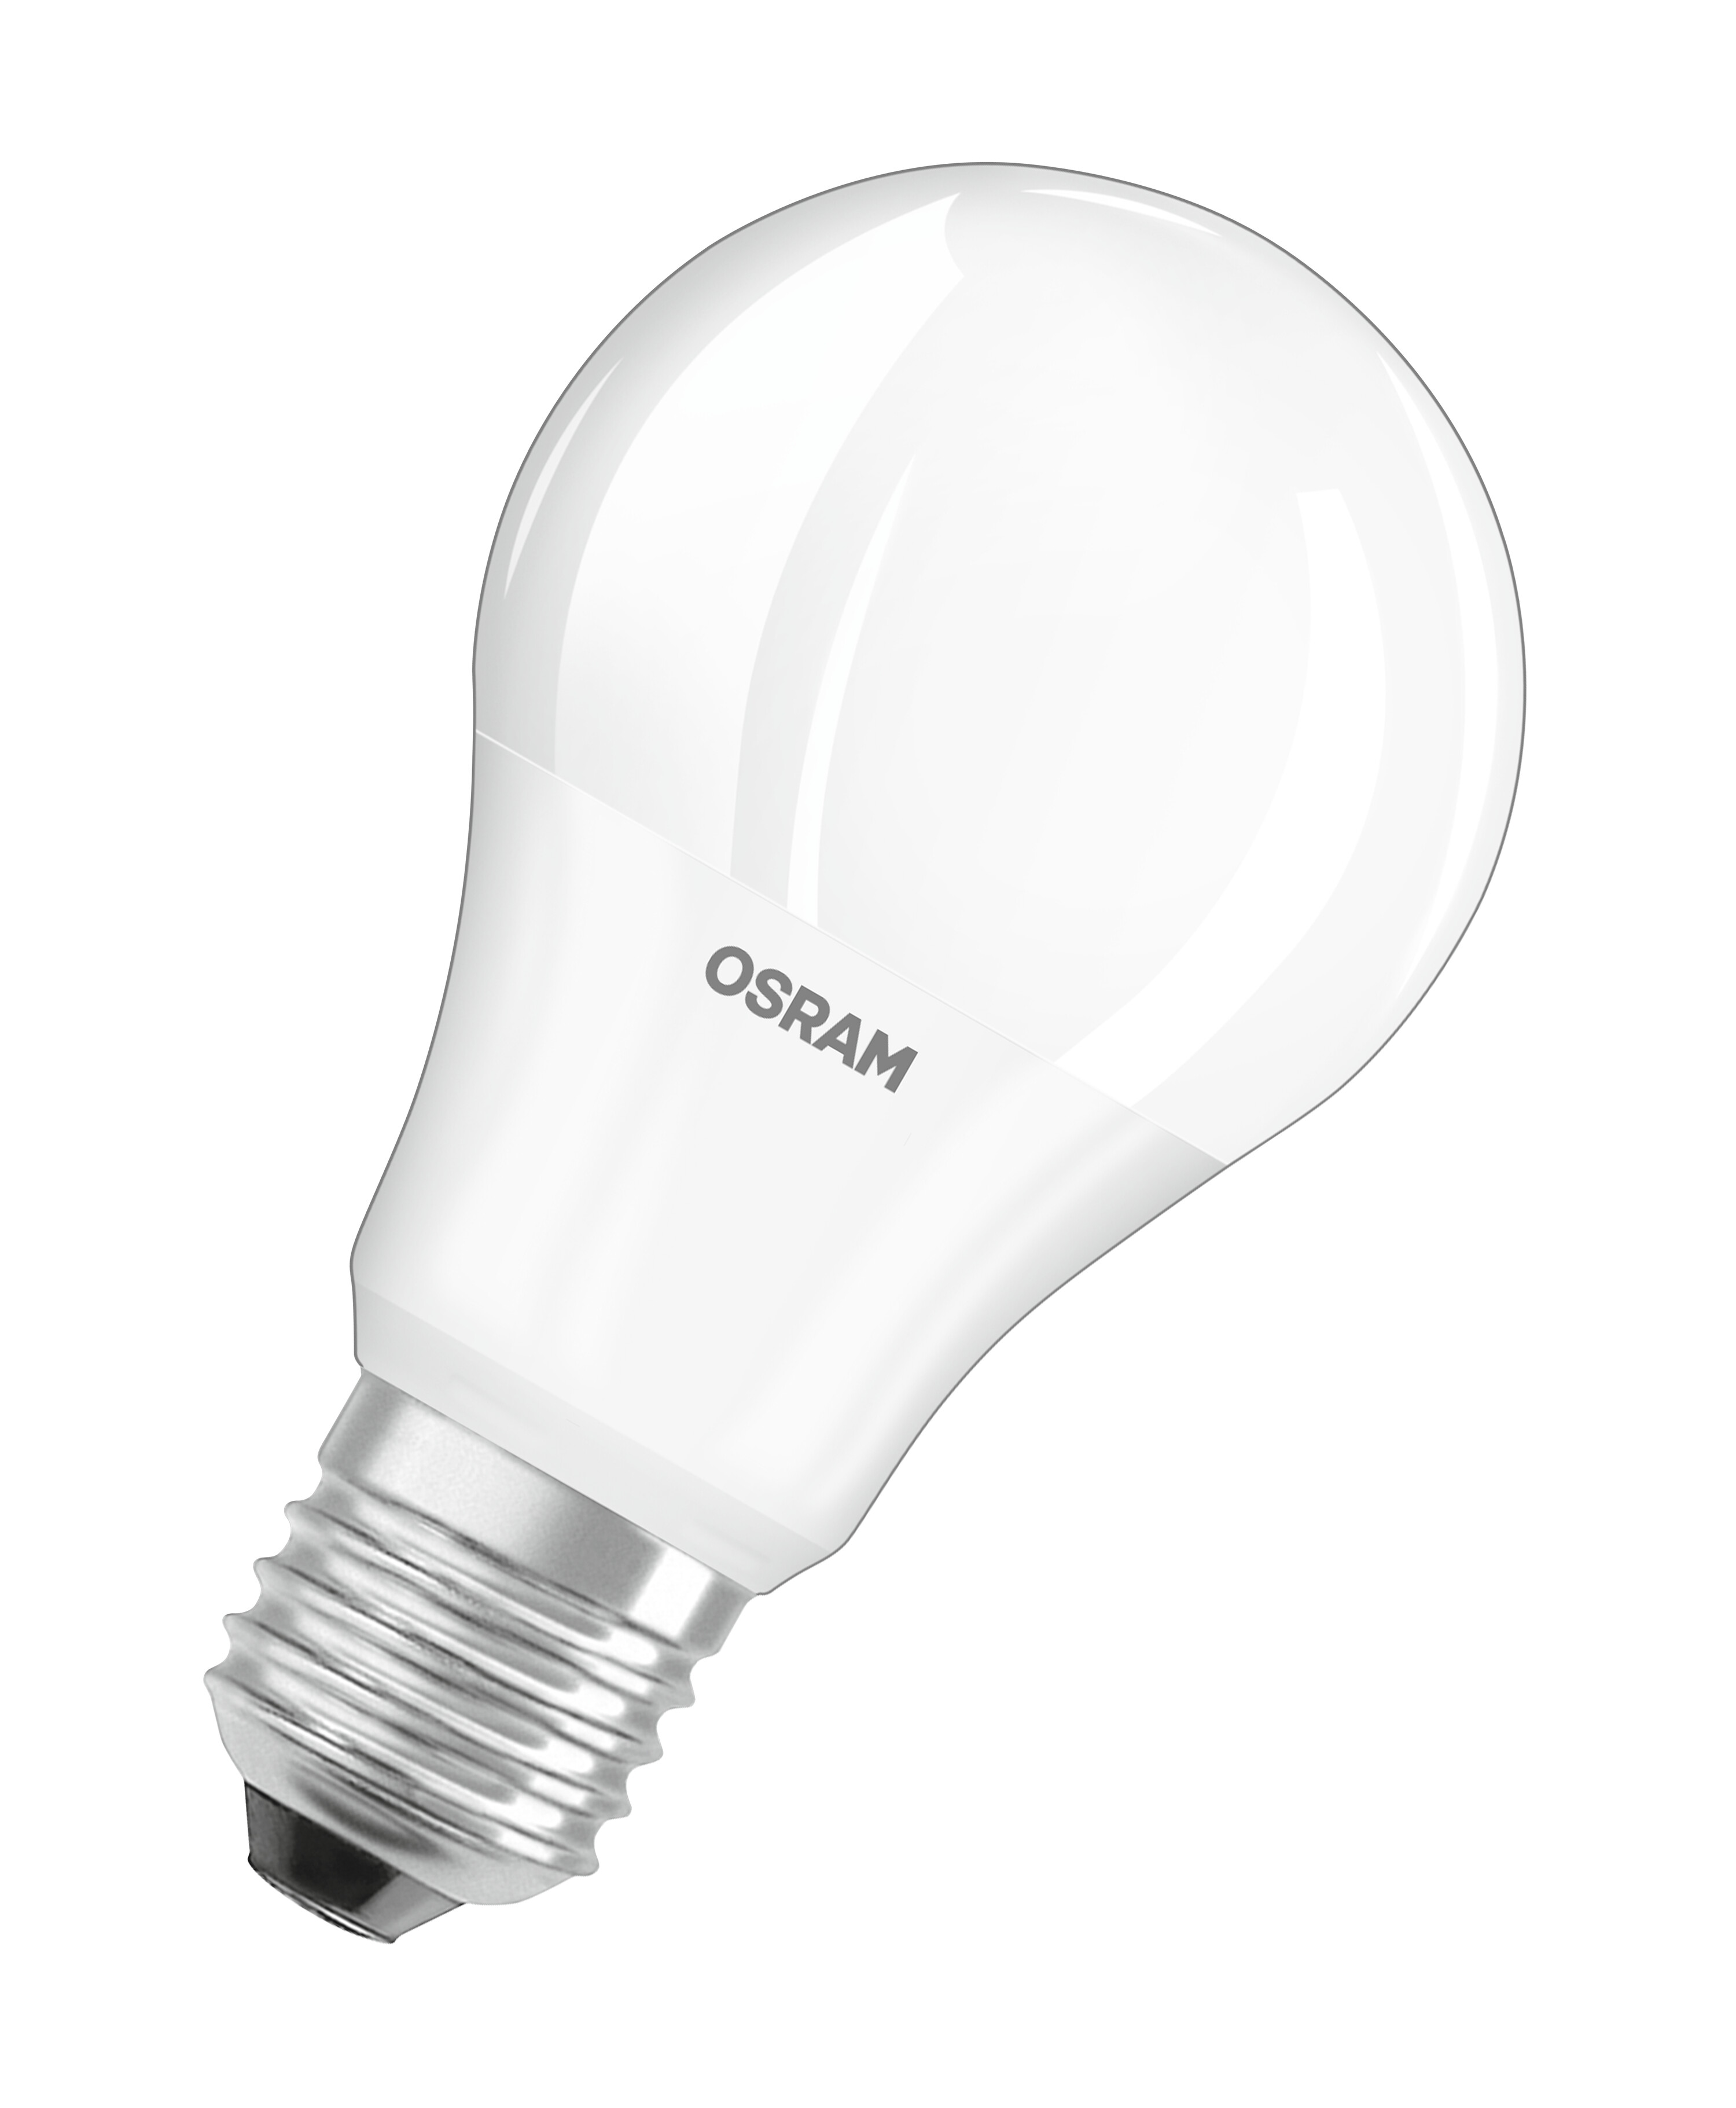 OSRAM  LED BASE CLASSIC W/2700 Lampe 8.5 Warmweiß A 60 806 E27 Lumen FR LED